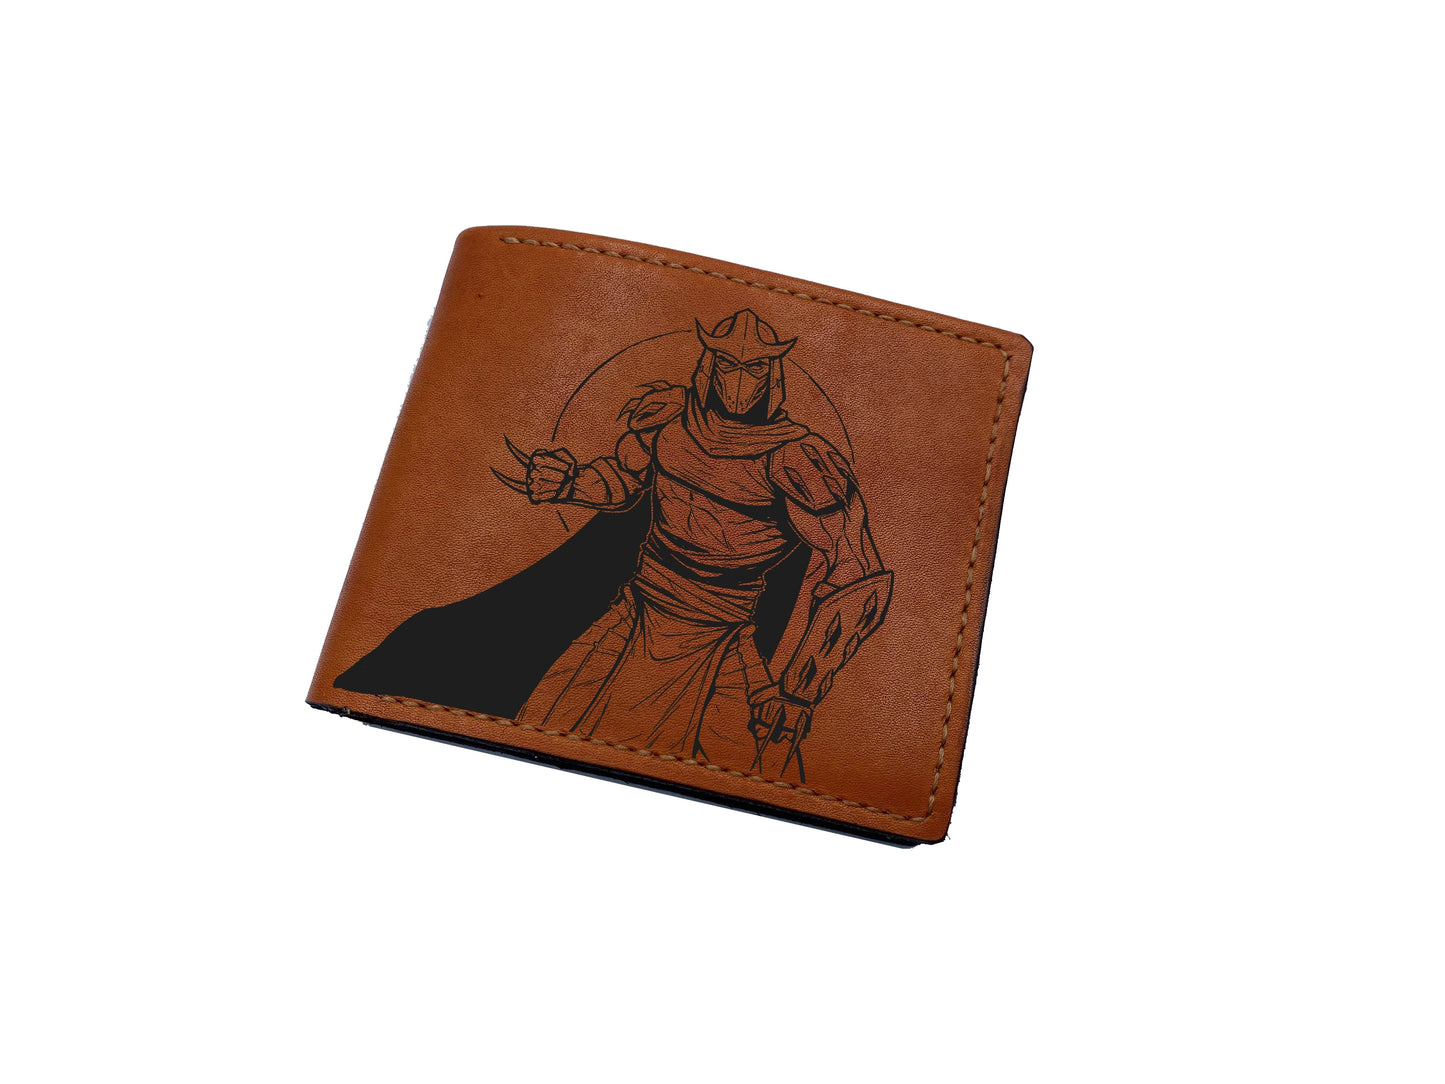 Mayan Corner - Personalized genuine leather handmade wallet, leather gift ideas for him, ninja turtle leather art wallet - Shredder - 01112212